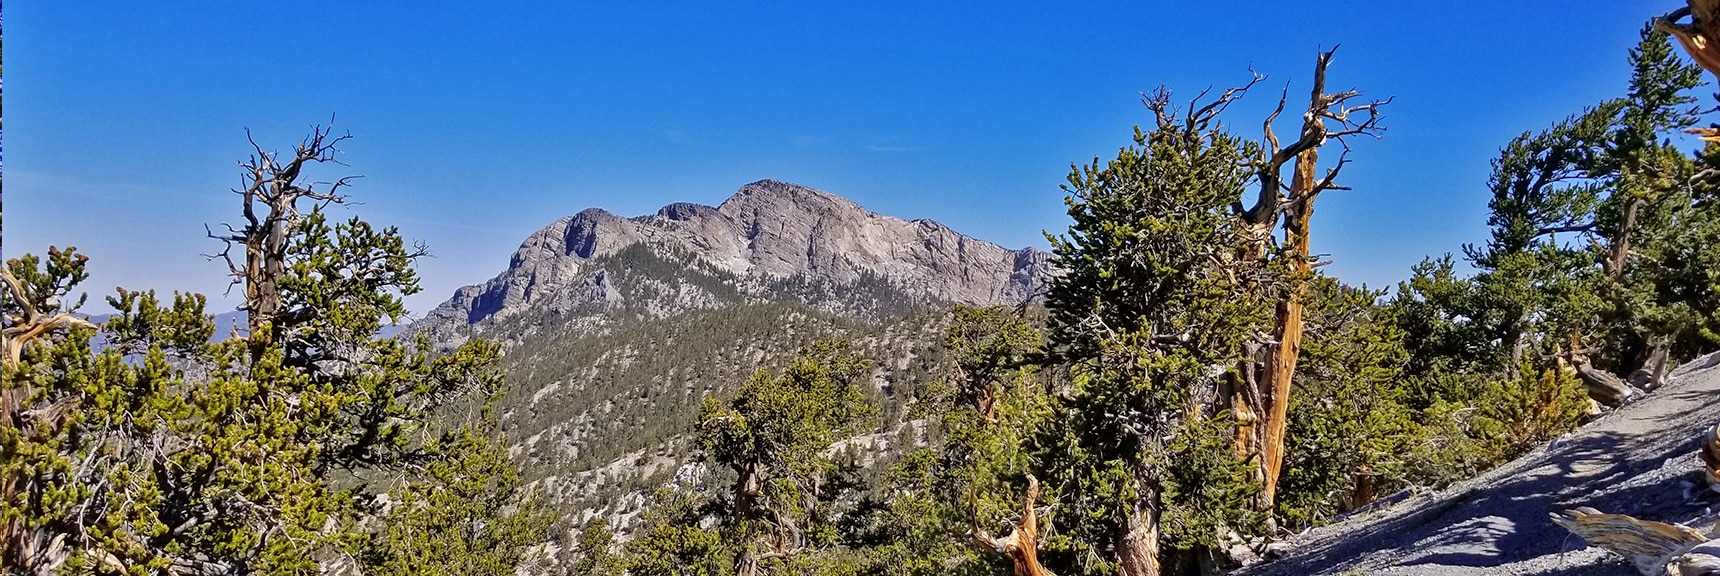 First View of McFarland Peak from Bonanza Trail | Base of McFarland Peak via Bristlecone Pine Trail and Bonanza Trail | Lee Canyon | Spring Mountains, Nevada